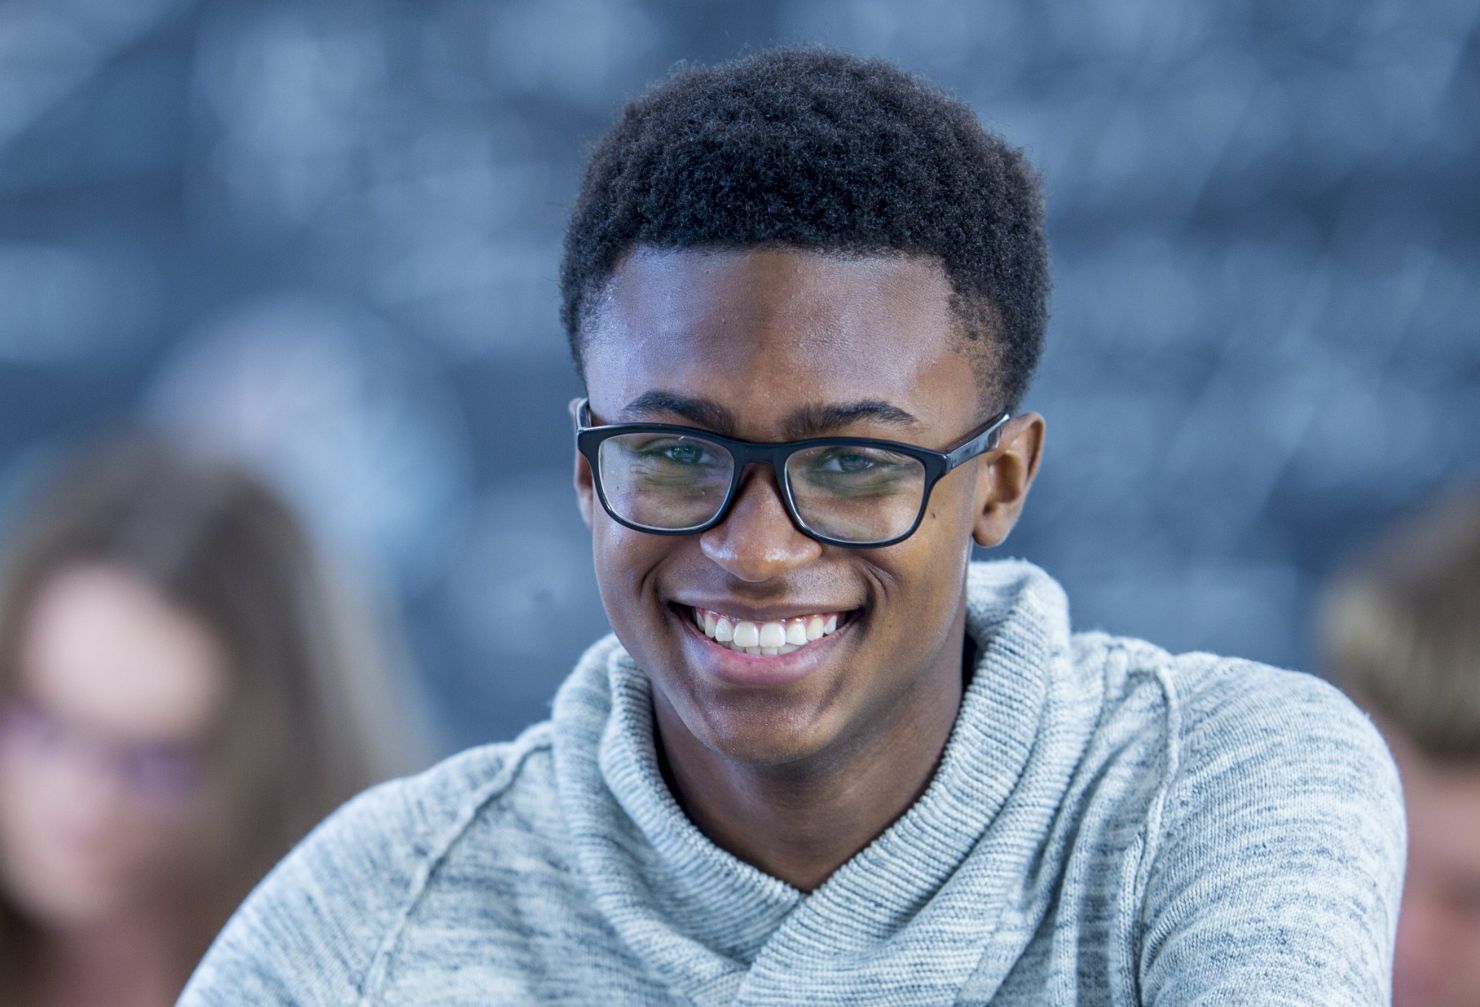 Meet the Black Teen Genius With an IQ Higher Than Bill Gates and Albert Einstein